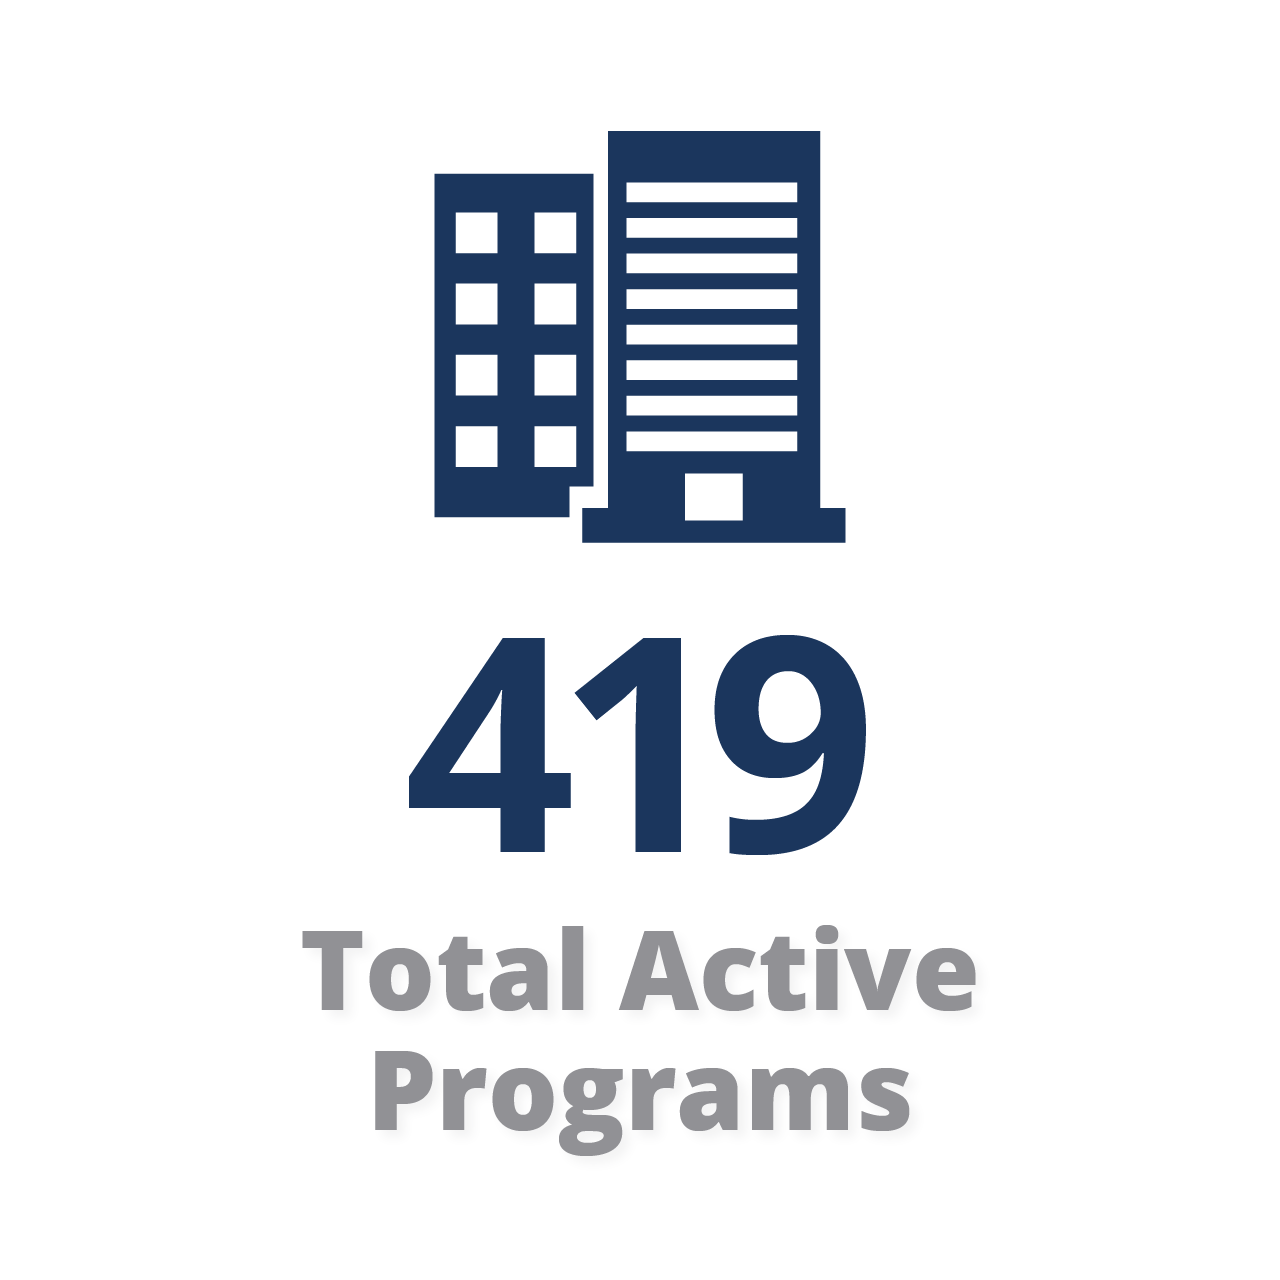 419 Total Active Programs